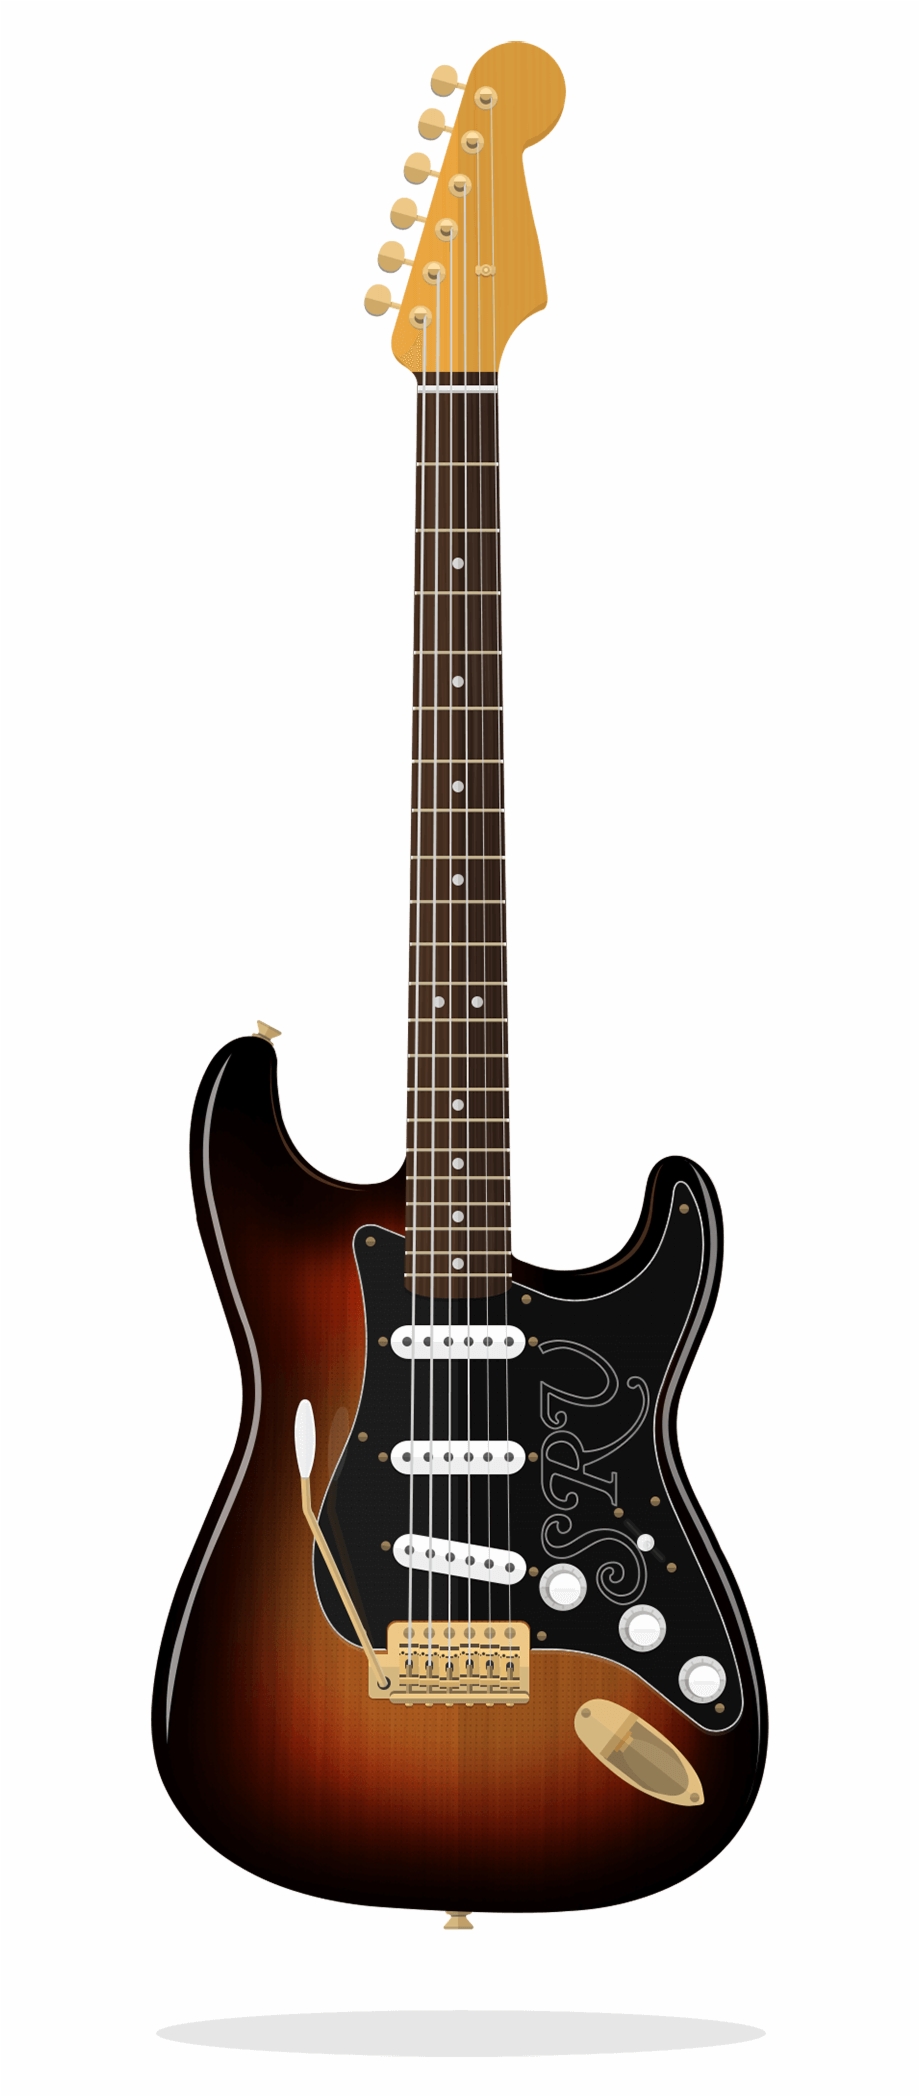 Fender Stratocaster Fender Stratocaster Stevie Ray Vaughan Signature